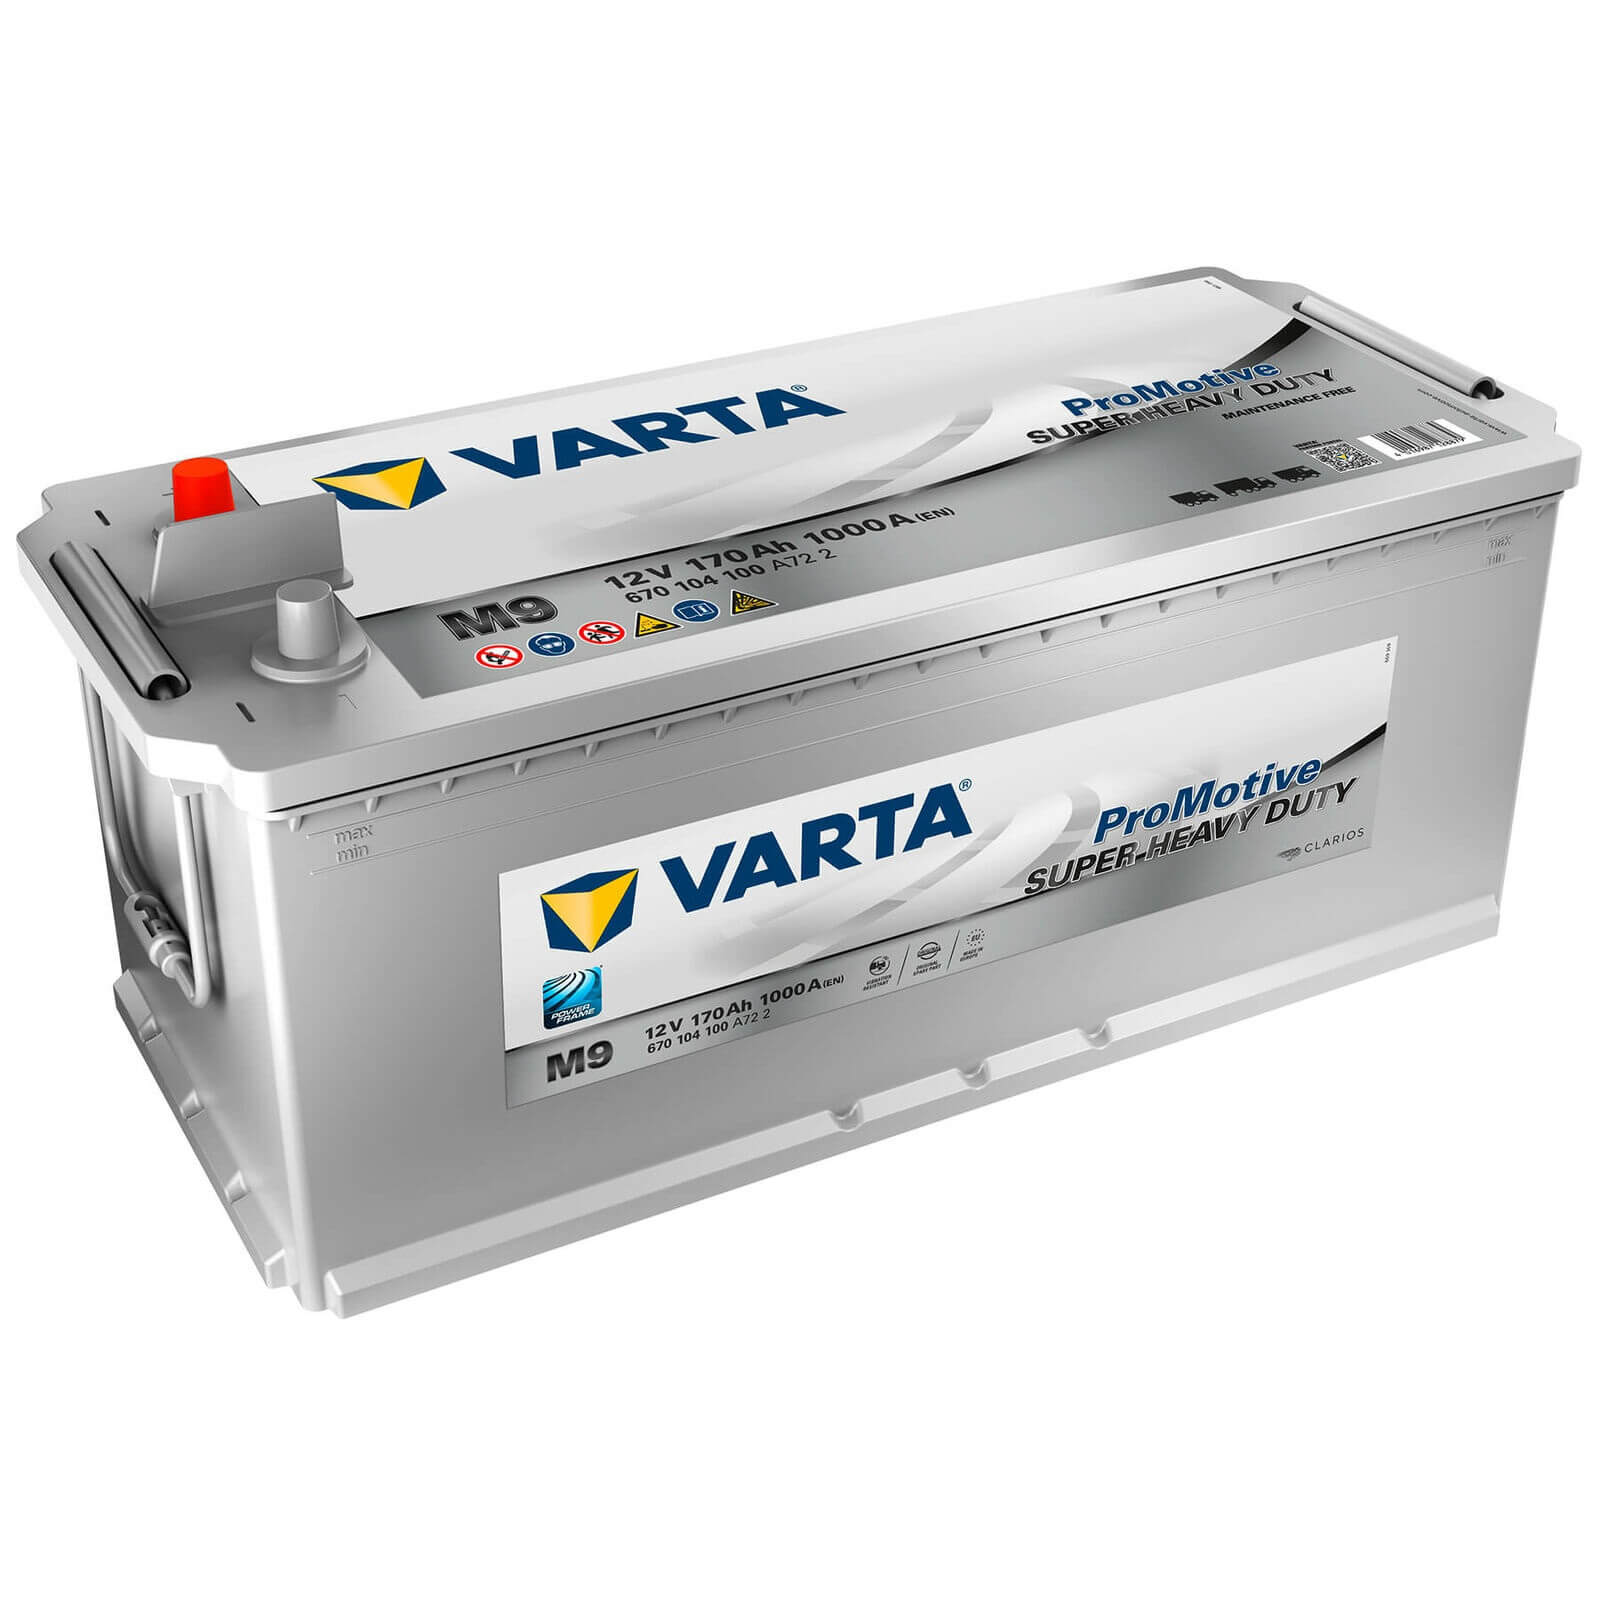 Varta M9 Promotive Super Heavy Duty 12V 170Ah 1000A/EN